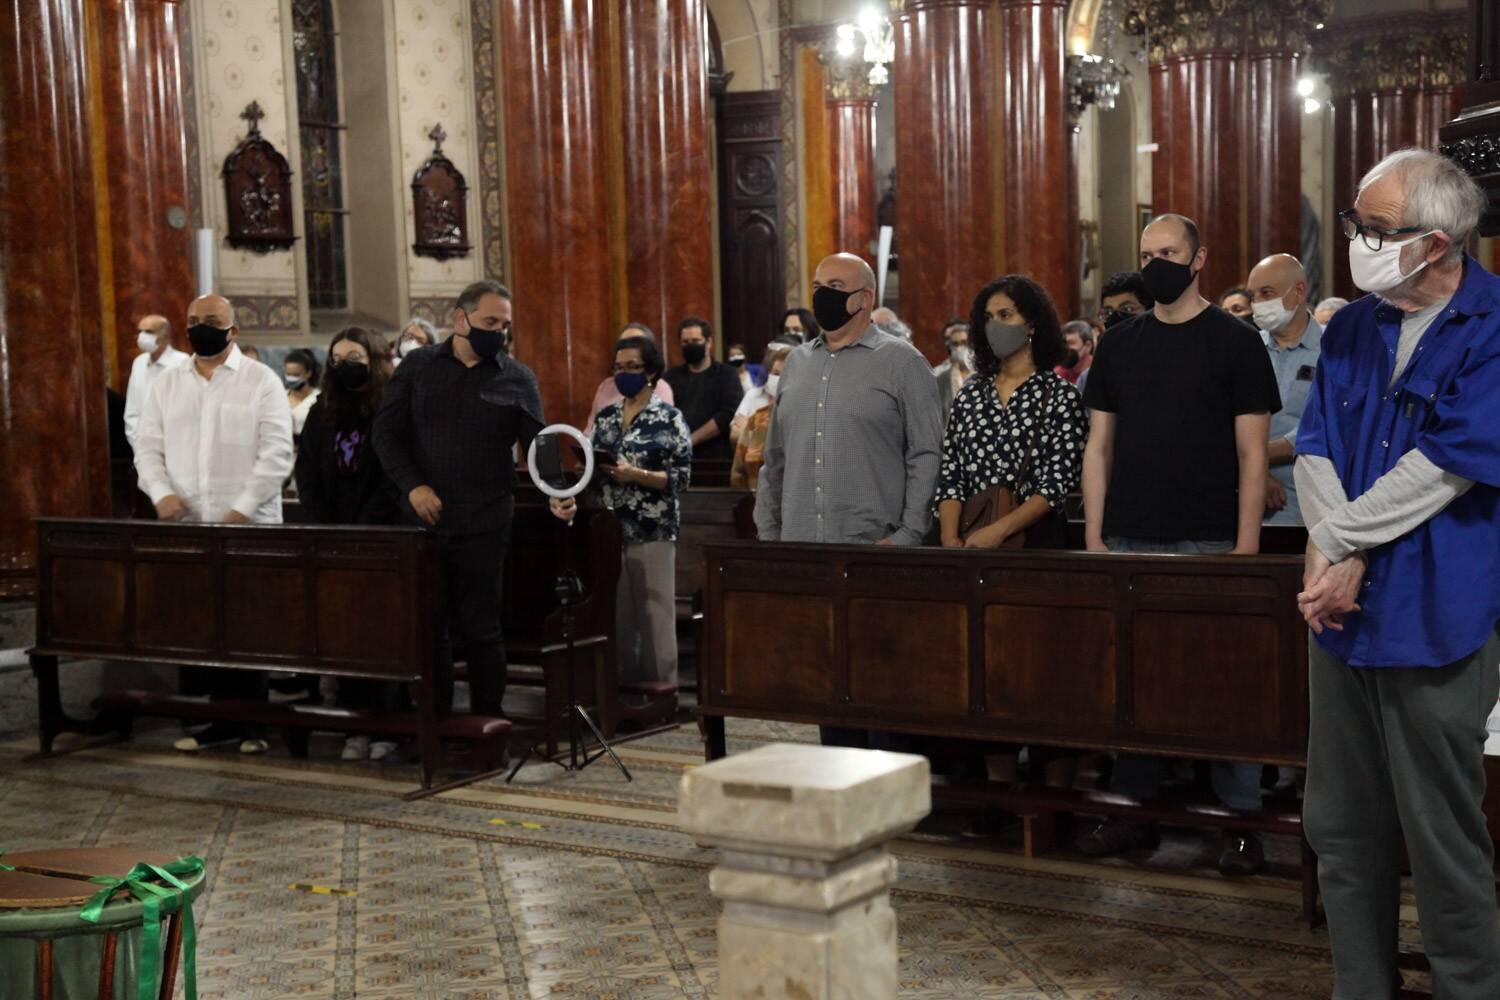 Homenagem a Sérgio Mamberti na Igreja Santa CecíliaMarcos Ribas/Brazil News. Foto: Marcos Ribas/Brazil News